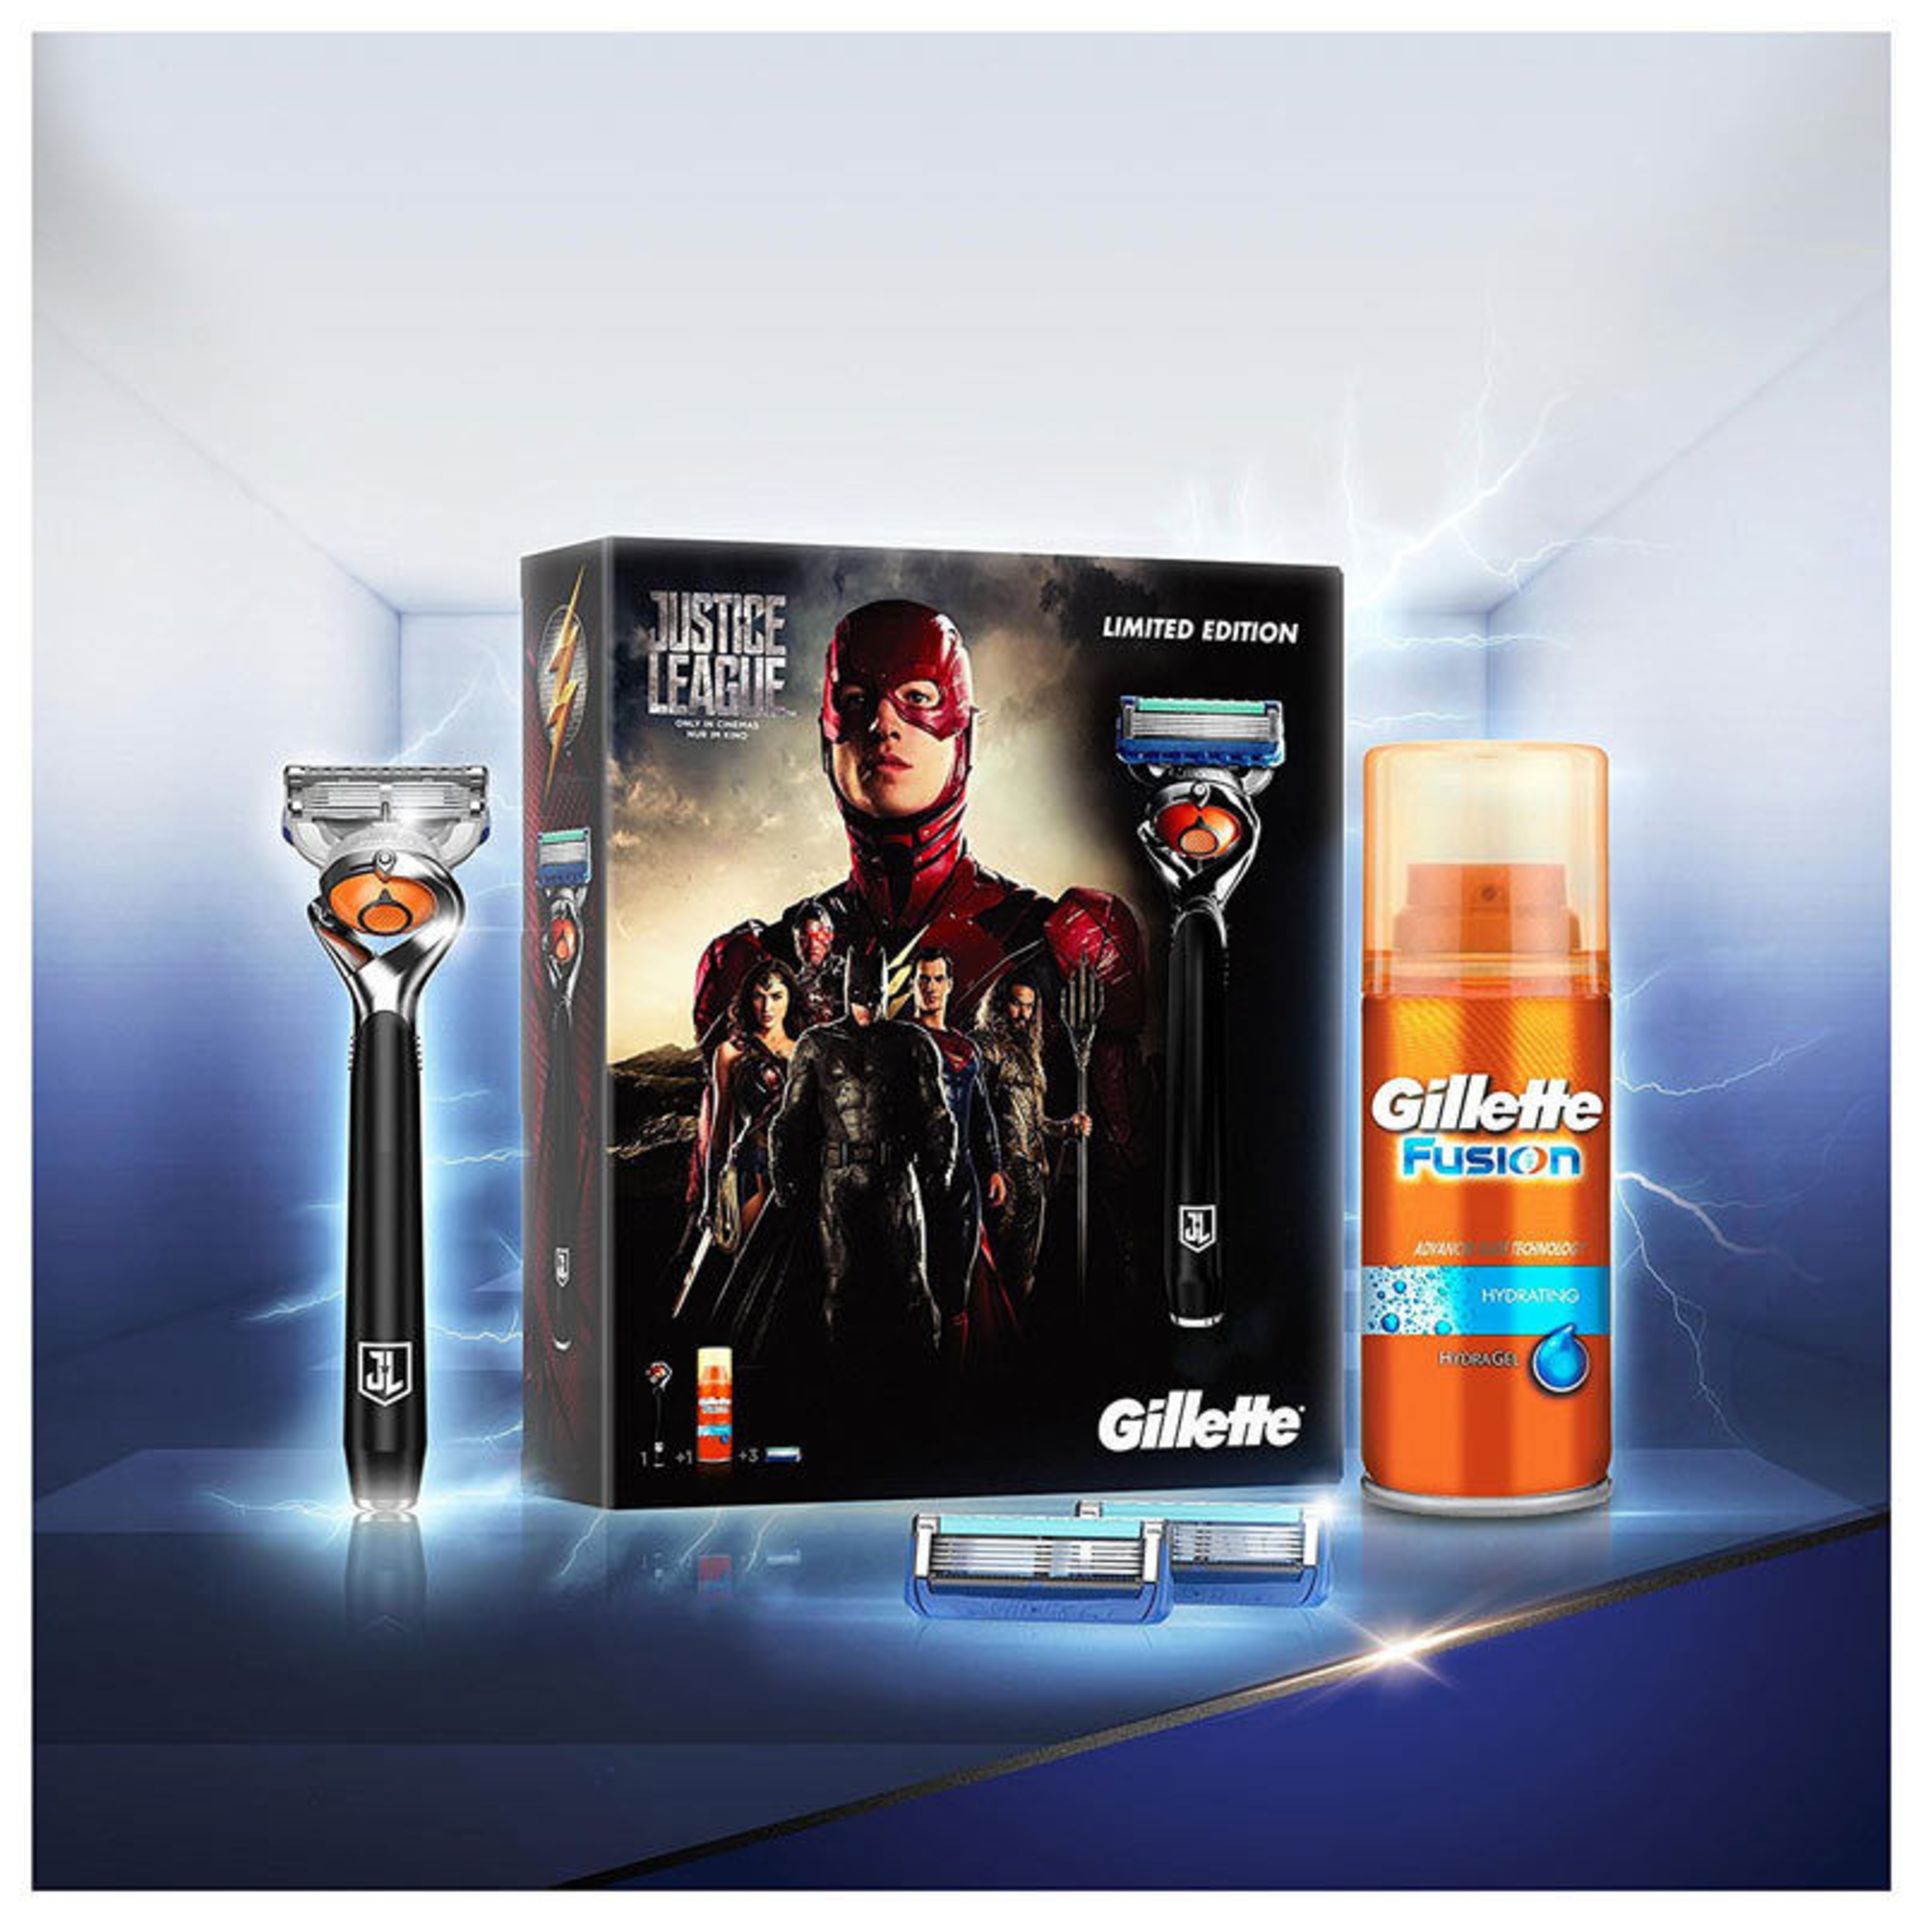 V Brand New Limited Edition Gillette Justice League Gift Set Inc Gillette Fusion ProGlide Razer -